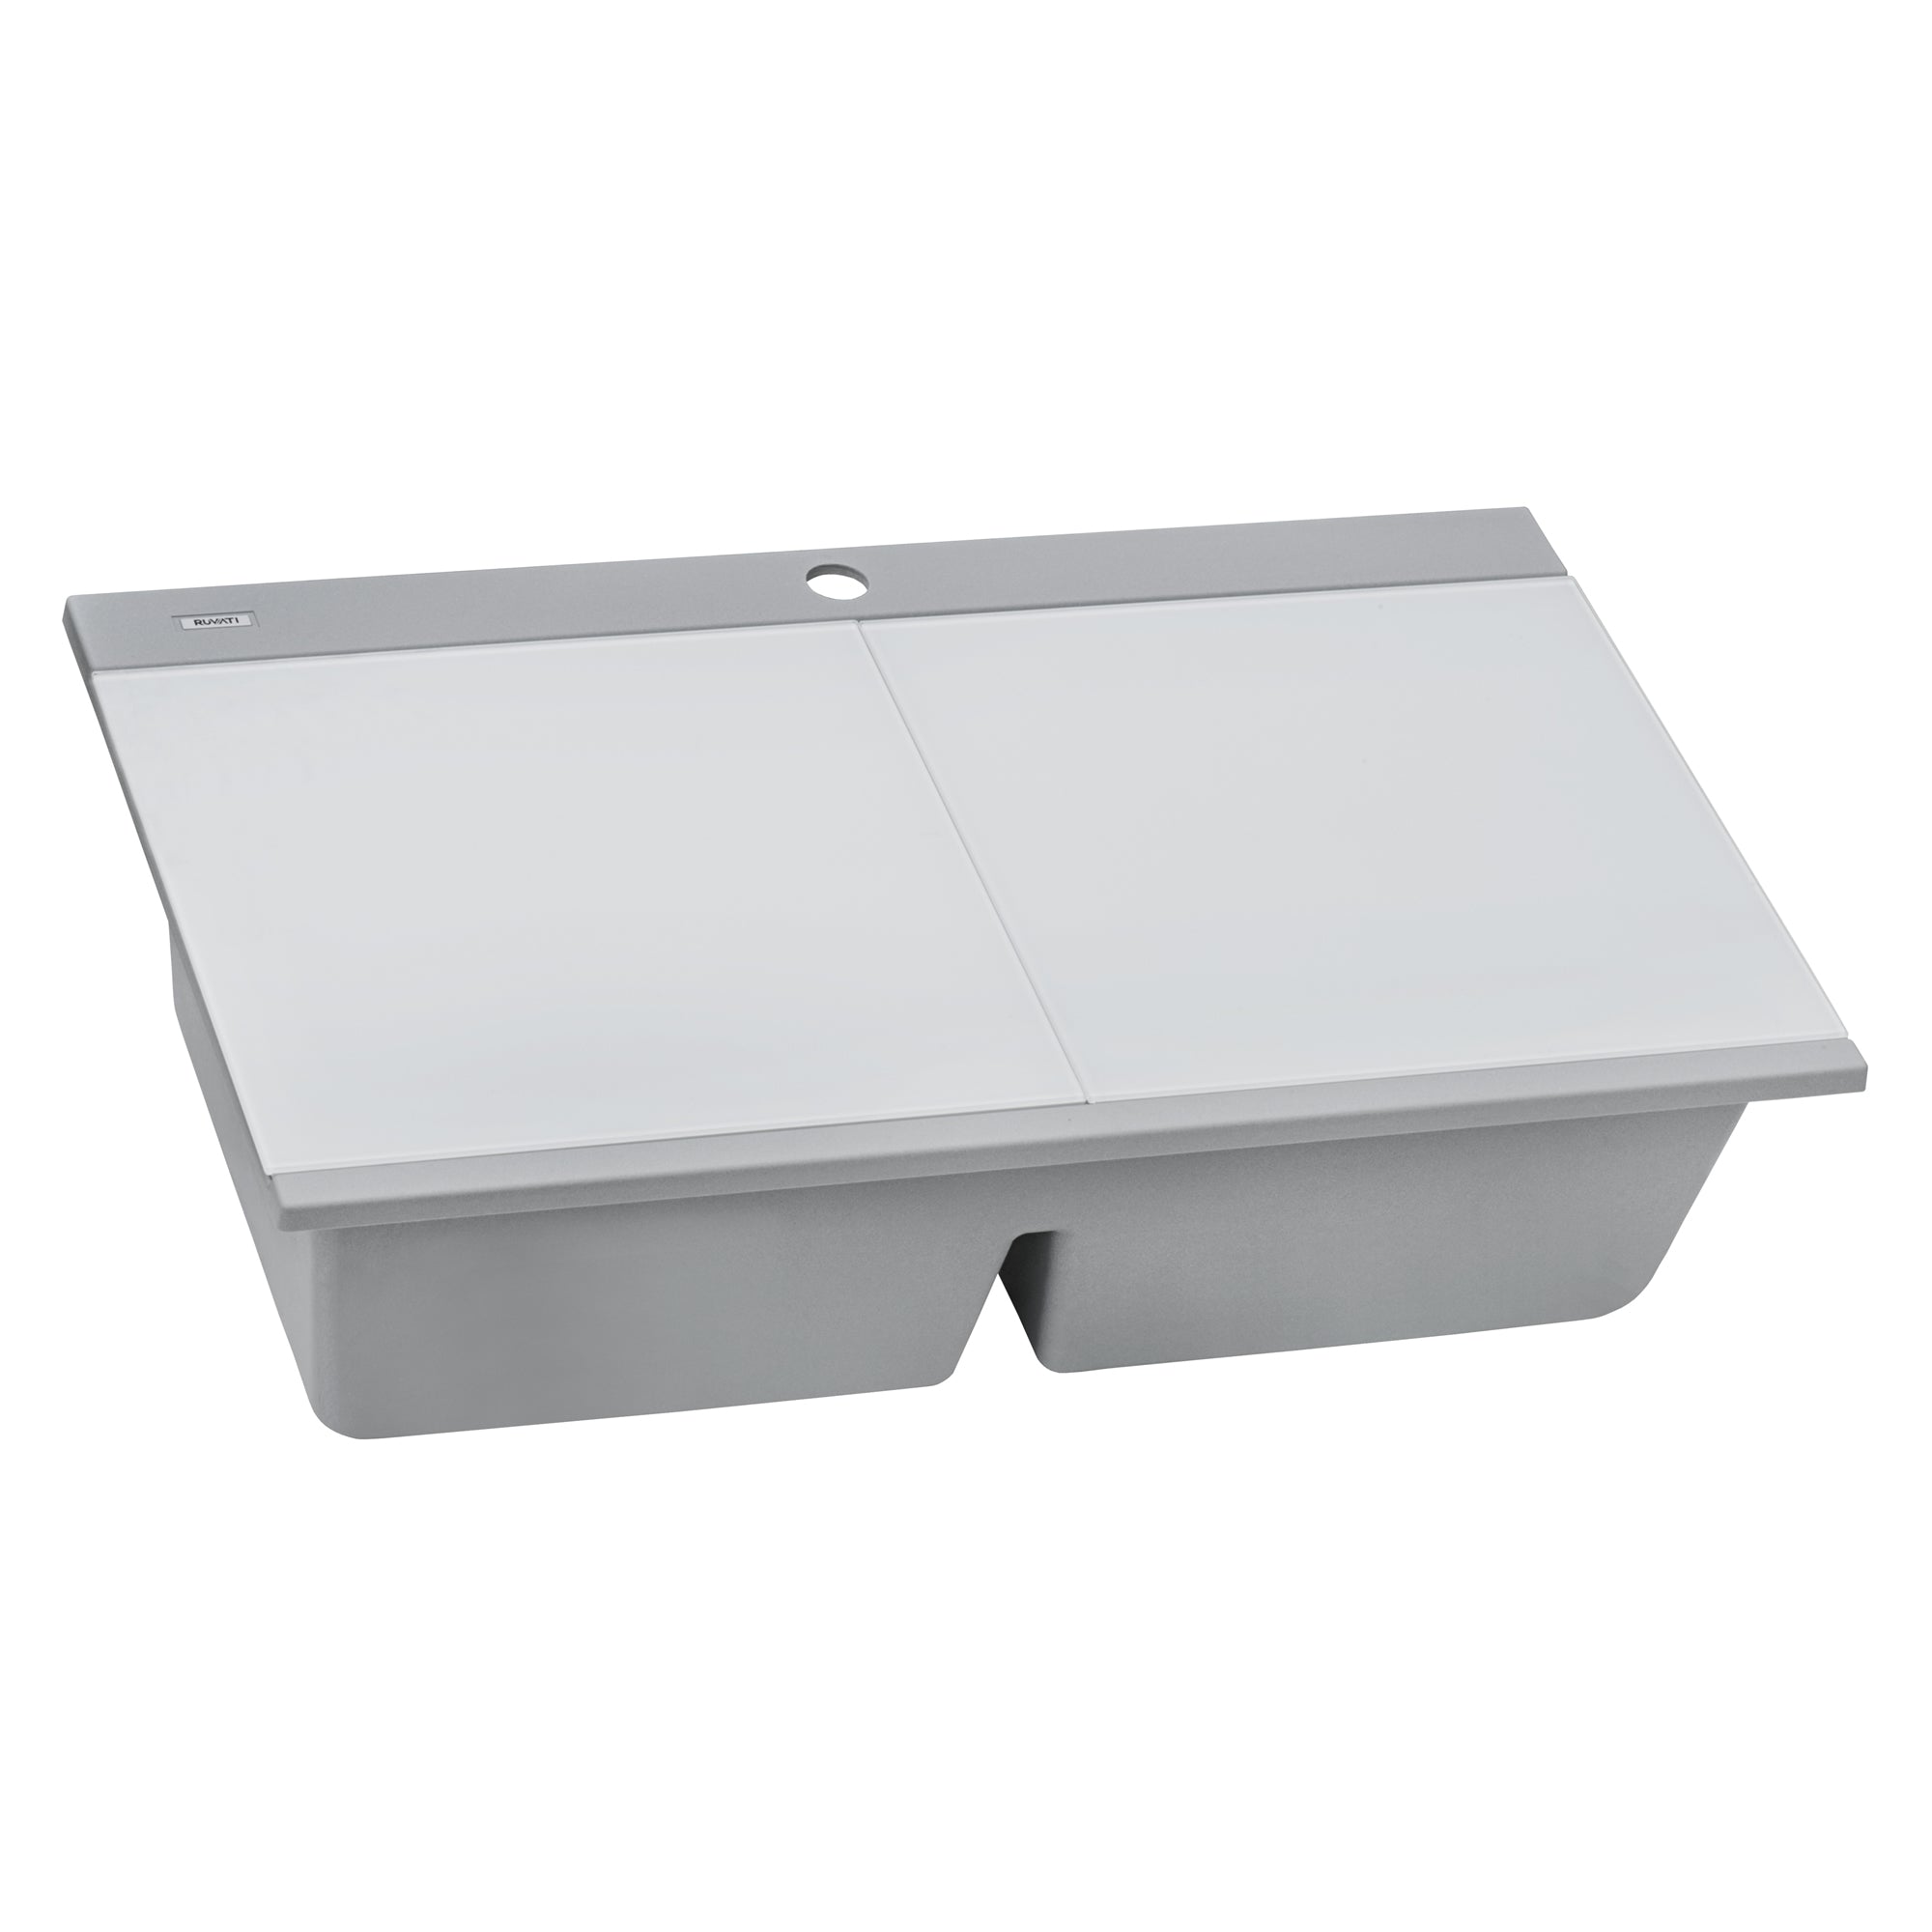 Ruvati 34" epiGranite Topmount Workstation Ledge Granite Composite Kitchen Sink